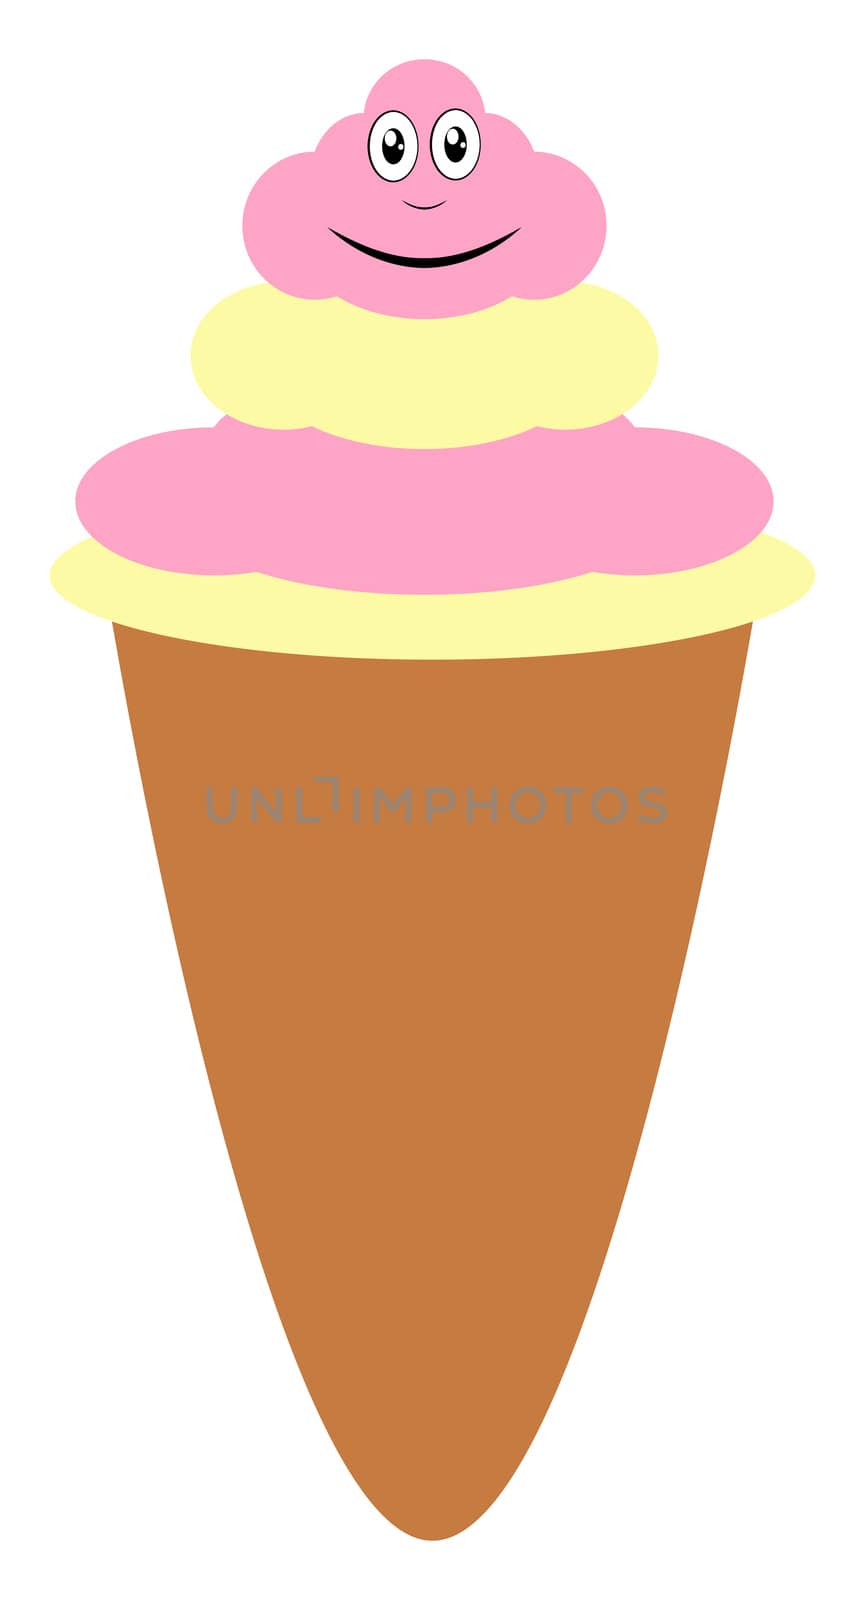 Ice cream in cornet, illustration, vector on white background